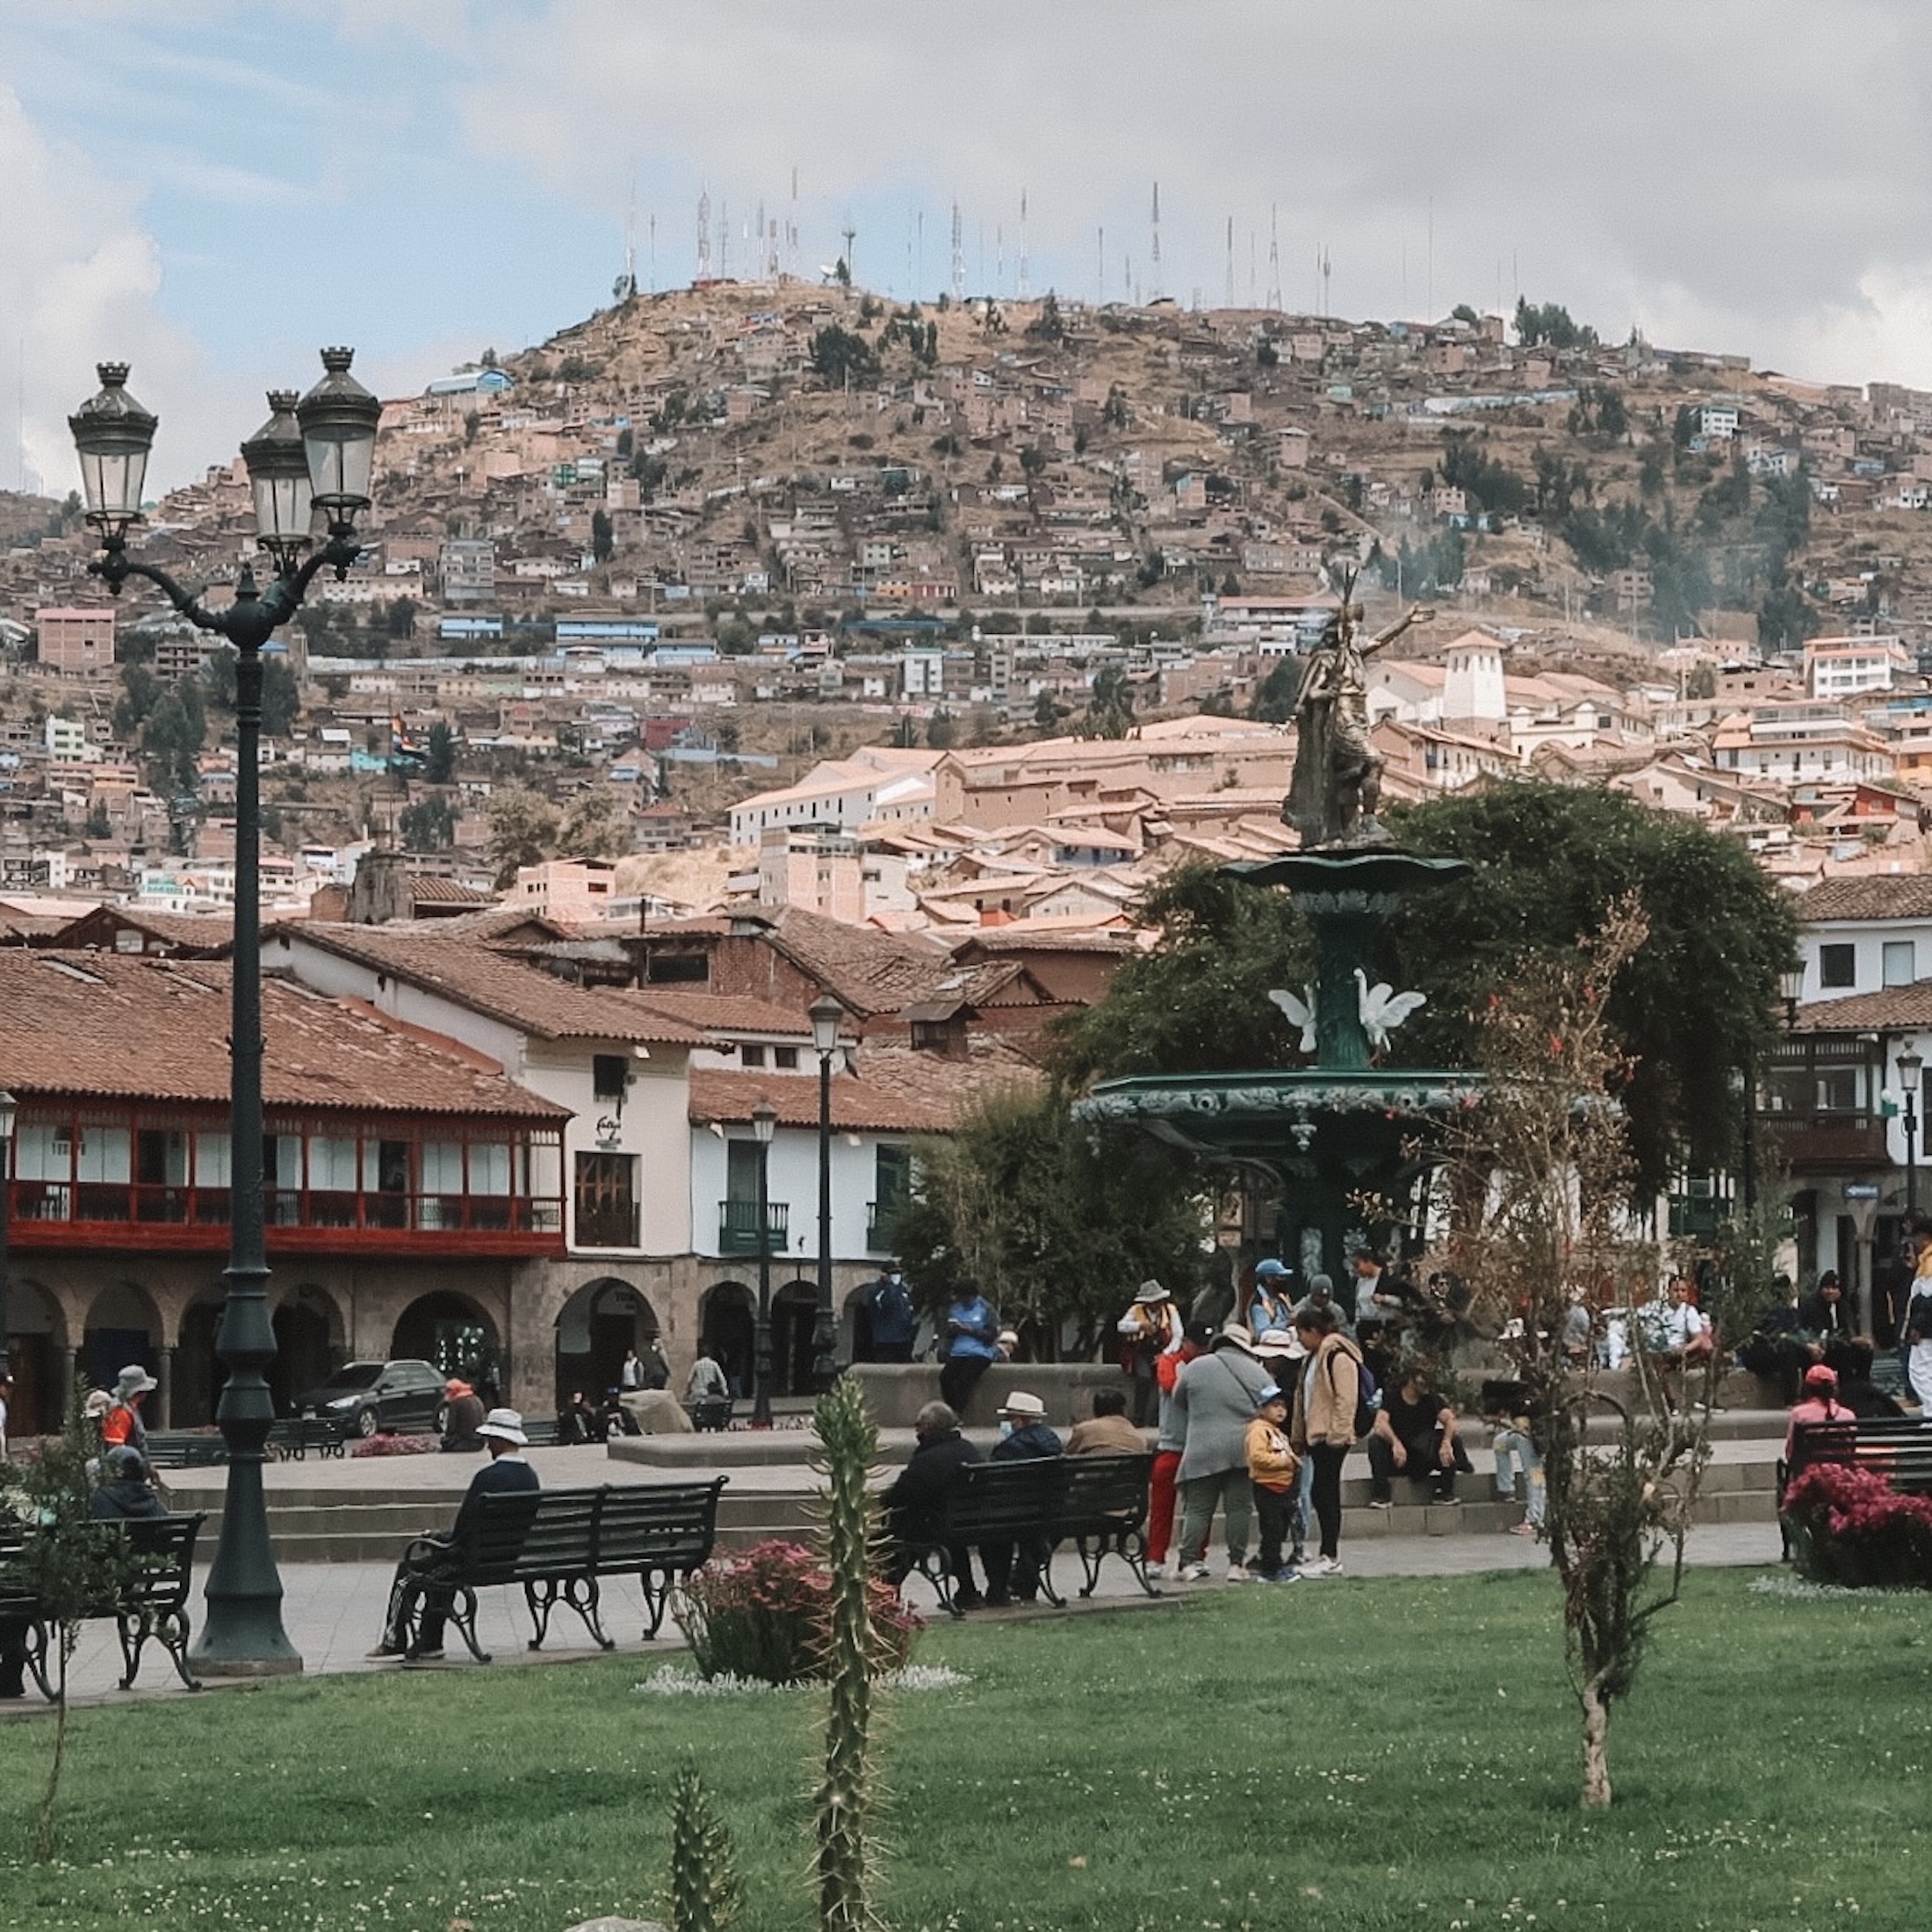 “Cusco